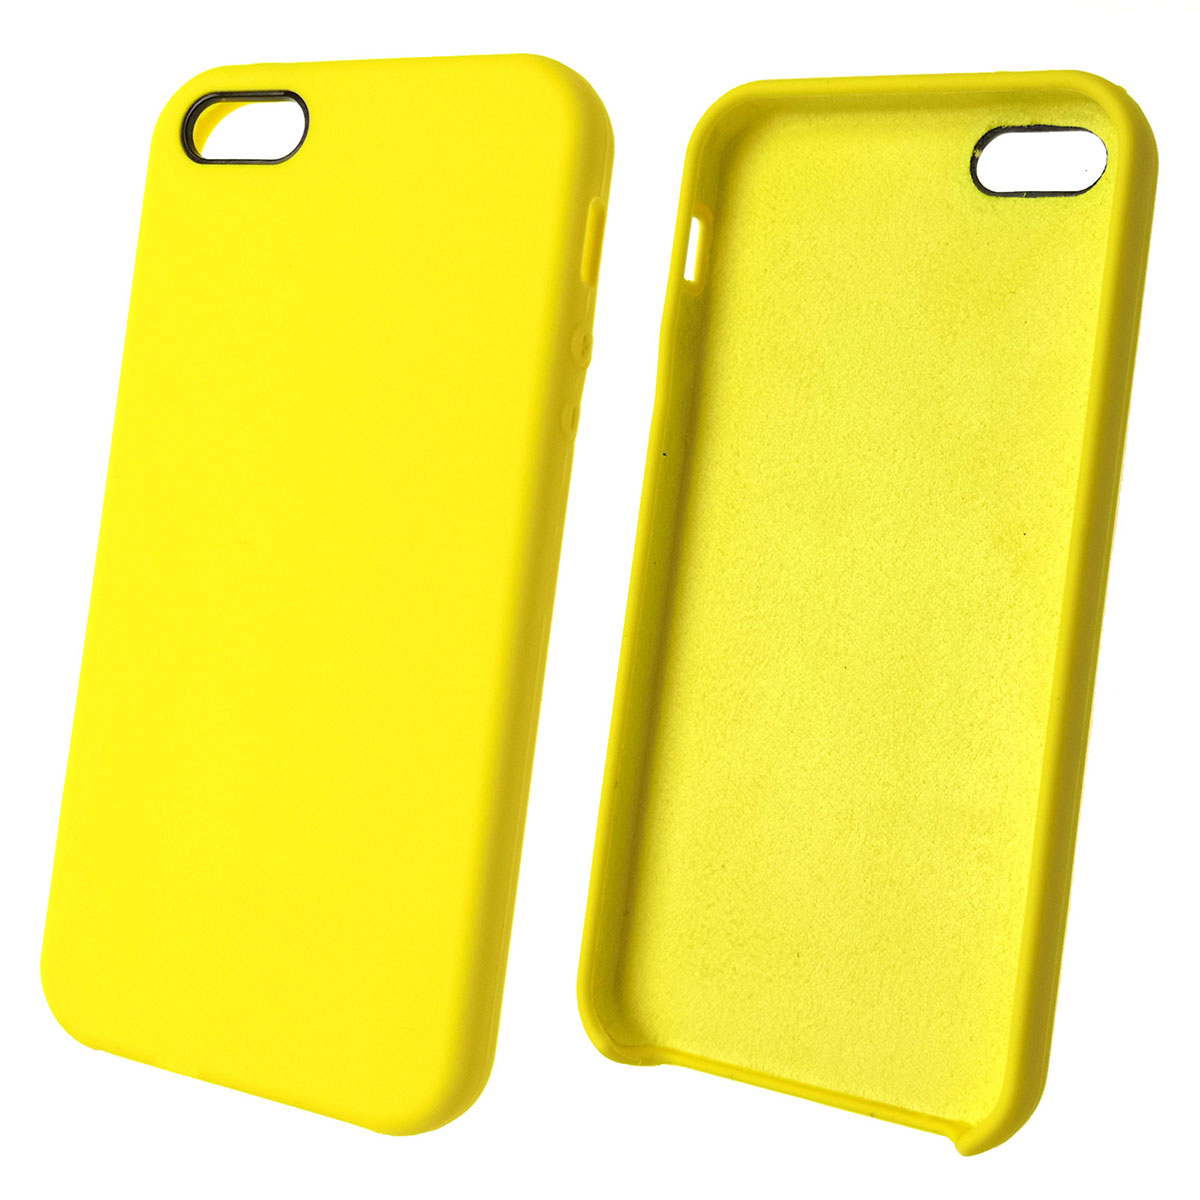 Чехол накладка Silicon Case для APPLE iPhone 5, 5S, SE, силикон, бархат, цвет желтый